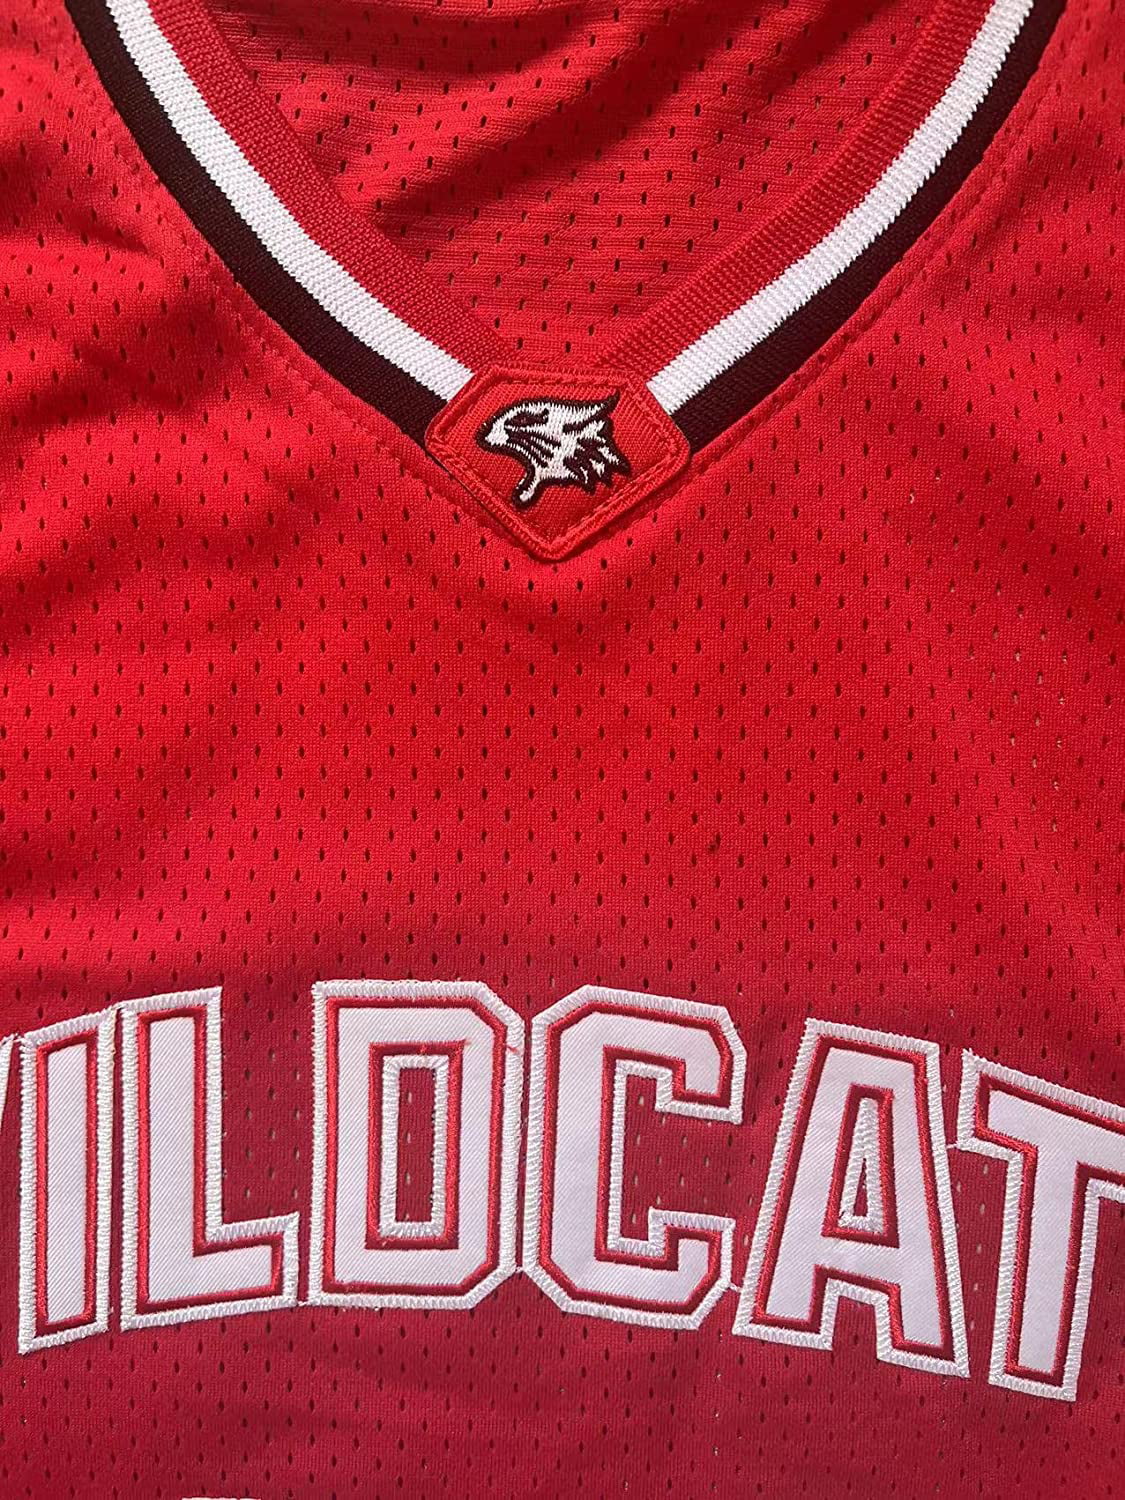 Dekeke Men's Troy Bolton #14 Chad Danforth #8 High School Wildcats Basketball Jersey Stitched